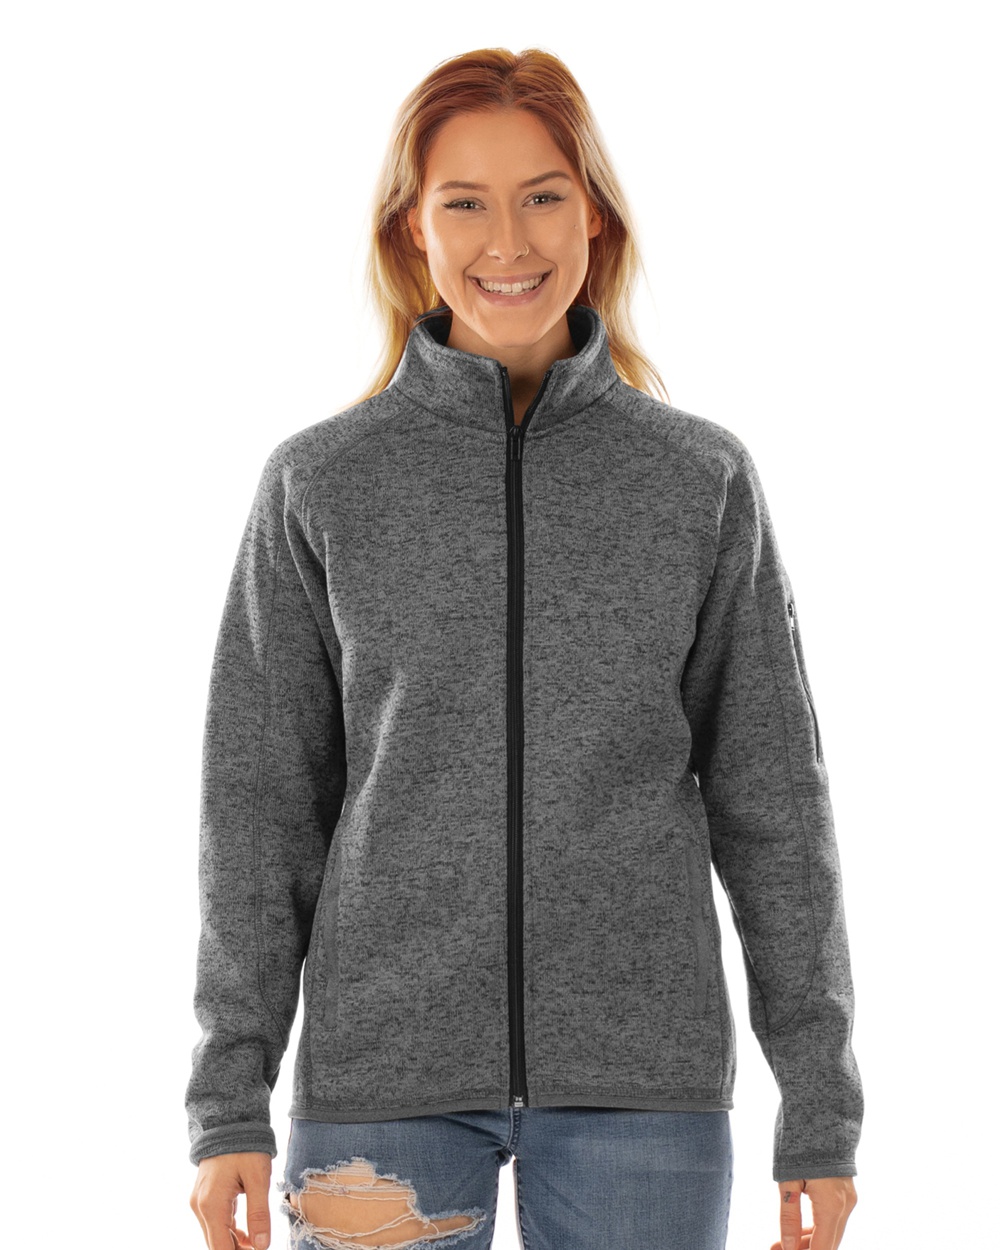 Burnside® B5901 Ladies Sweater Knit Jacket - One Stop